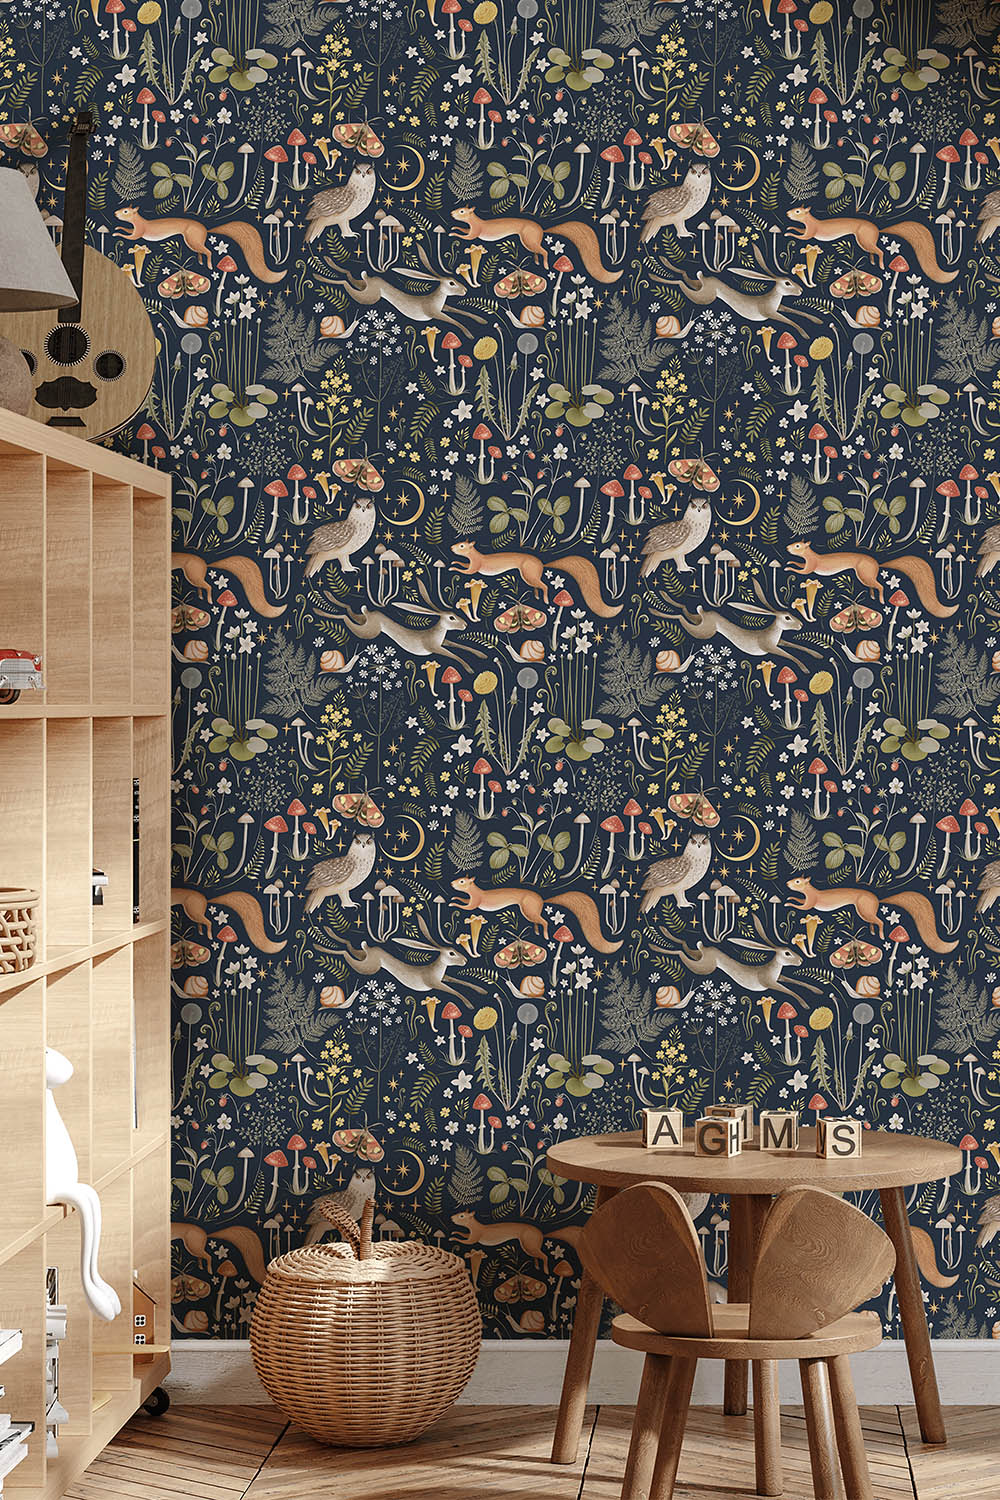 Whimsical animal wallpaper in playroom, Urbanwalls